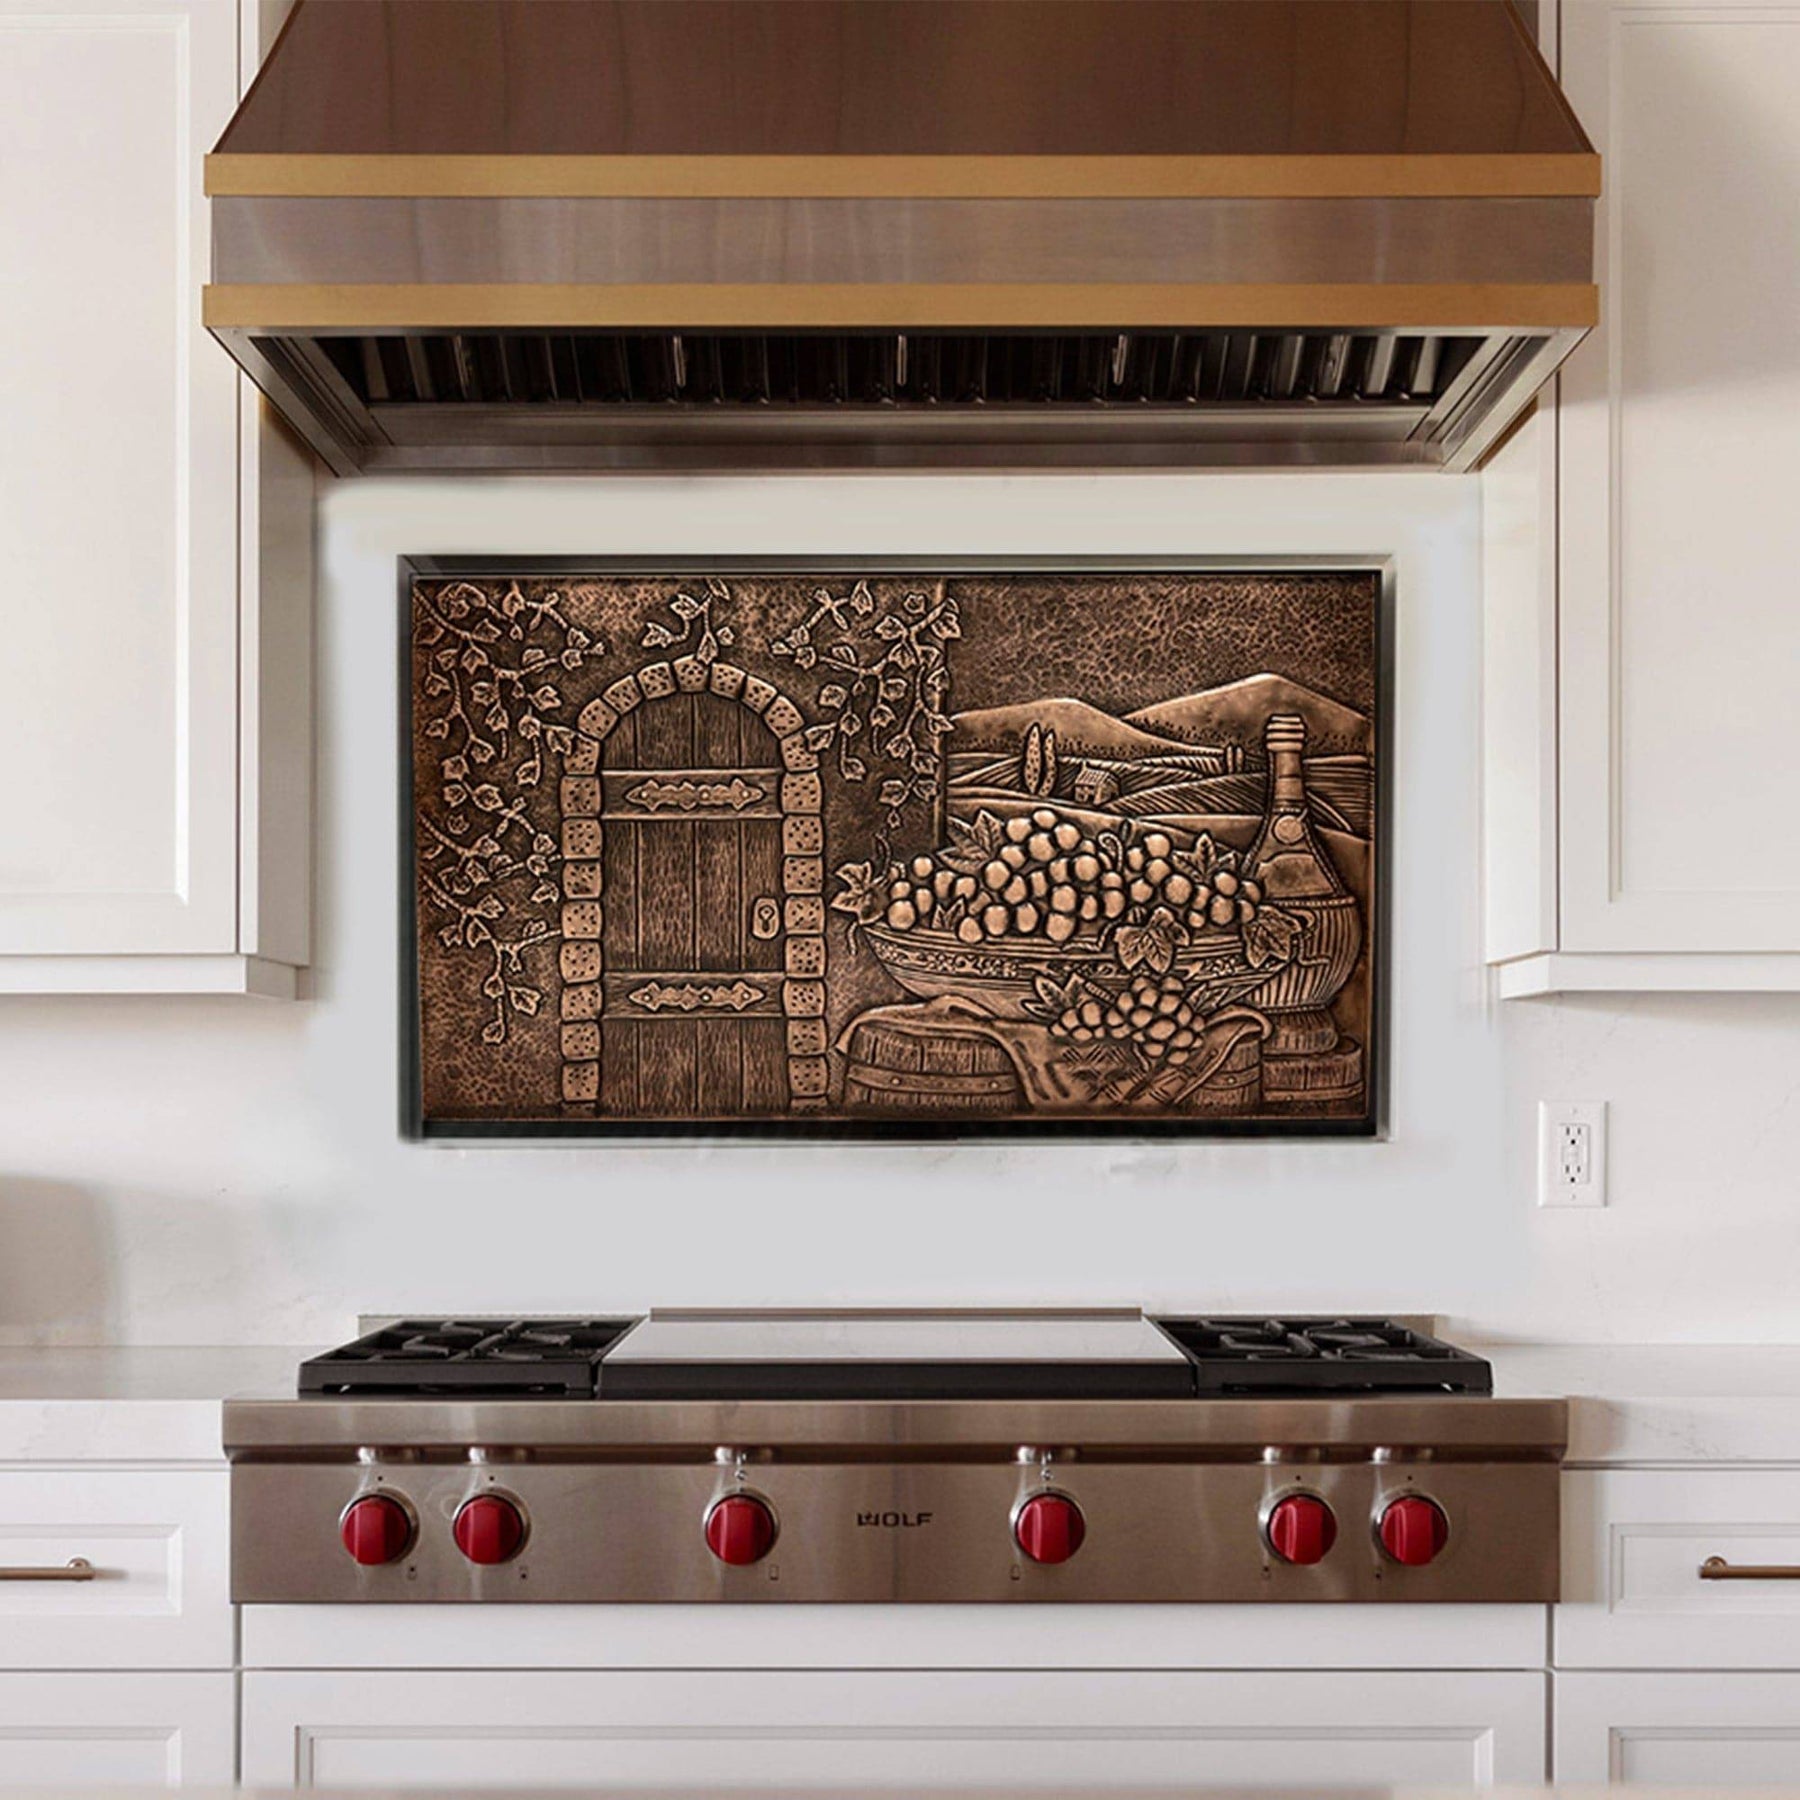 Fobest Handmade Copper Backsplash Kitchen Backsplash Wall Art Vineyard Design -BK6